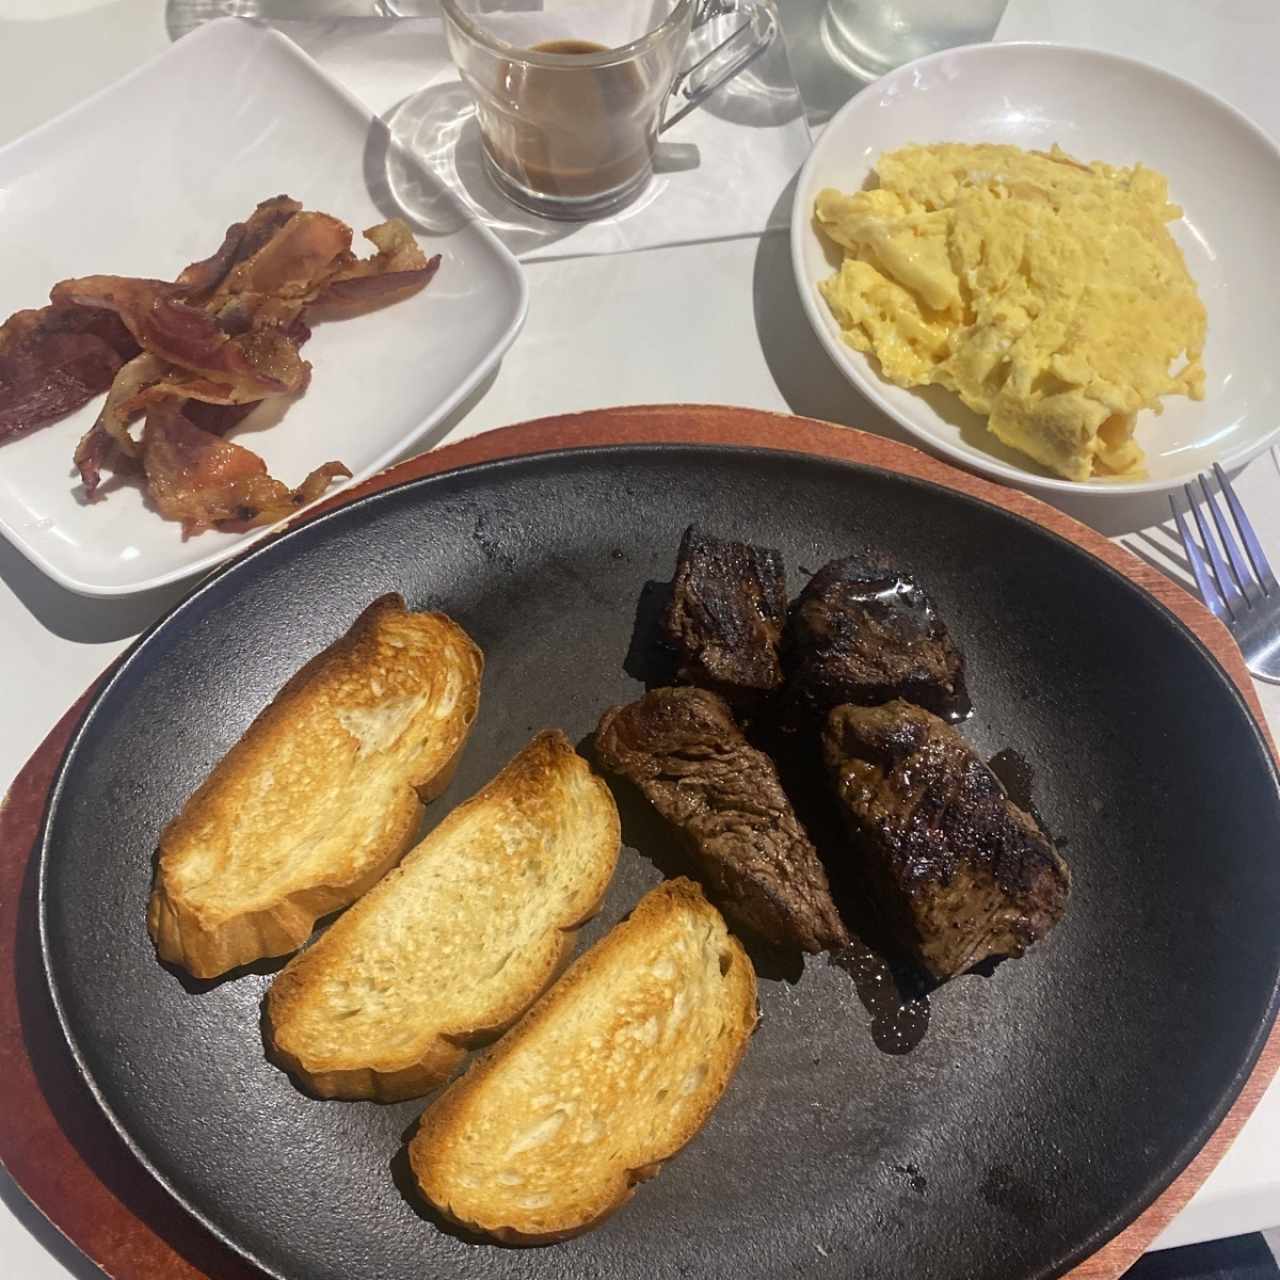 Steak and eggs